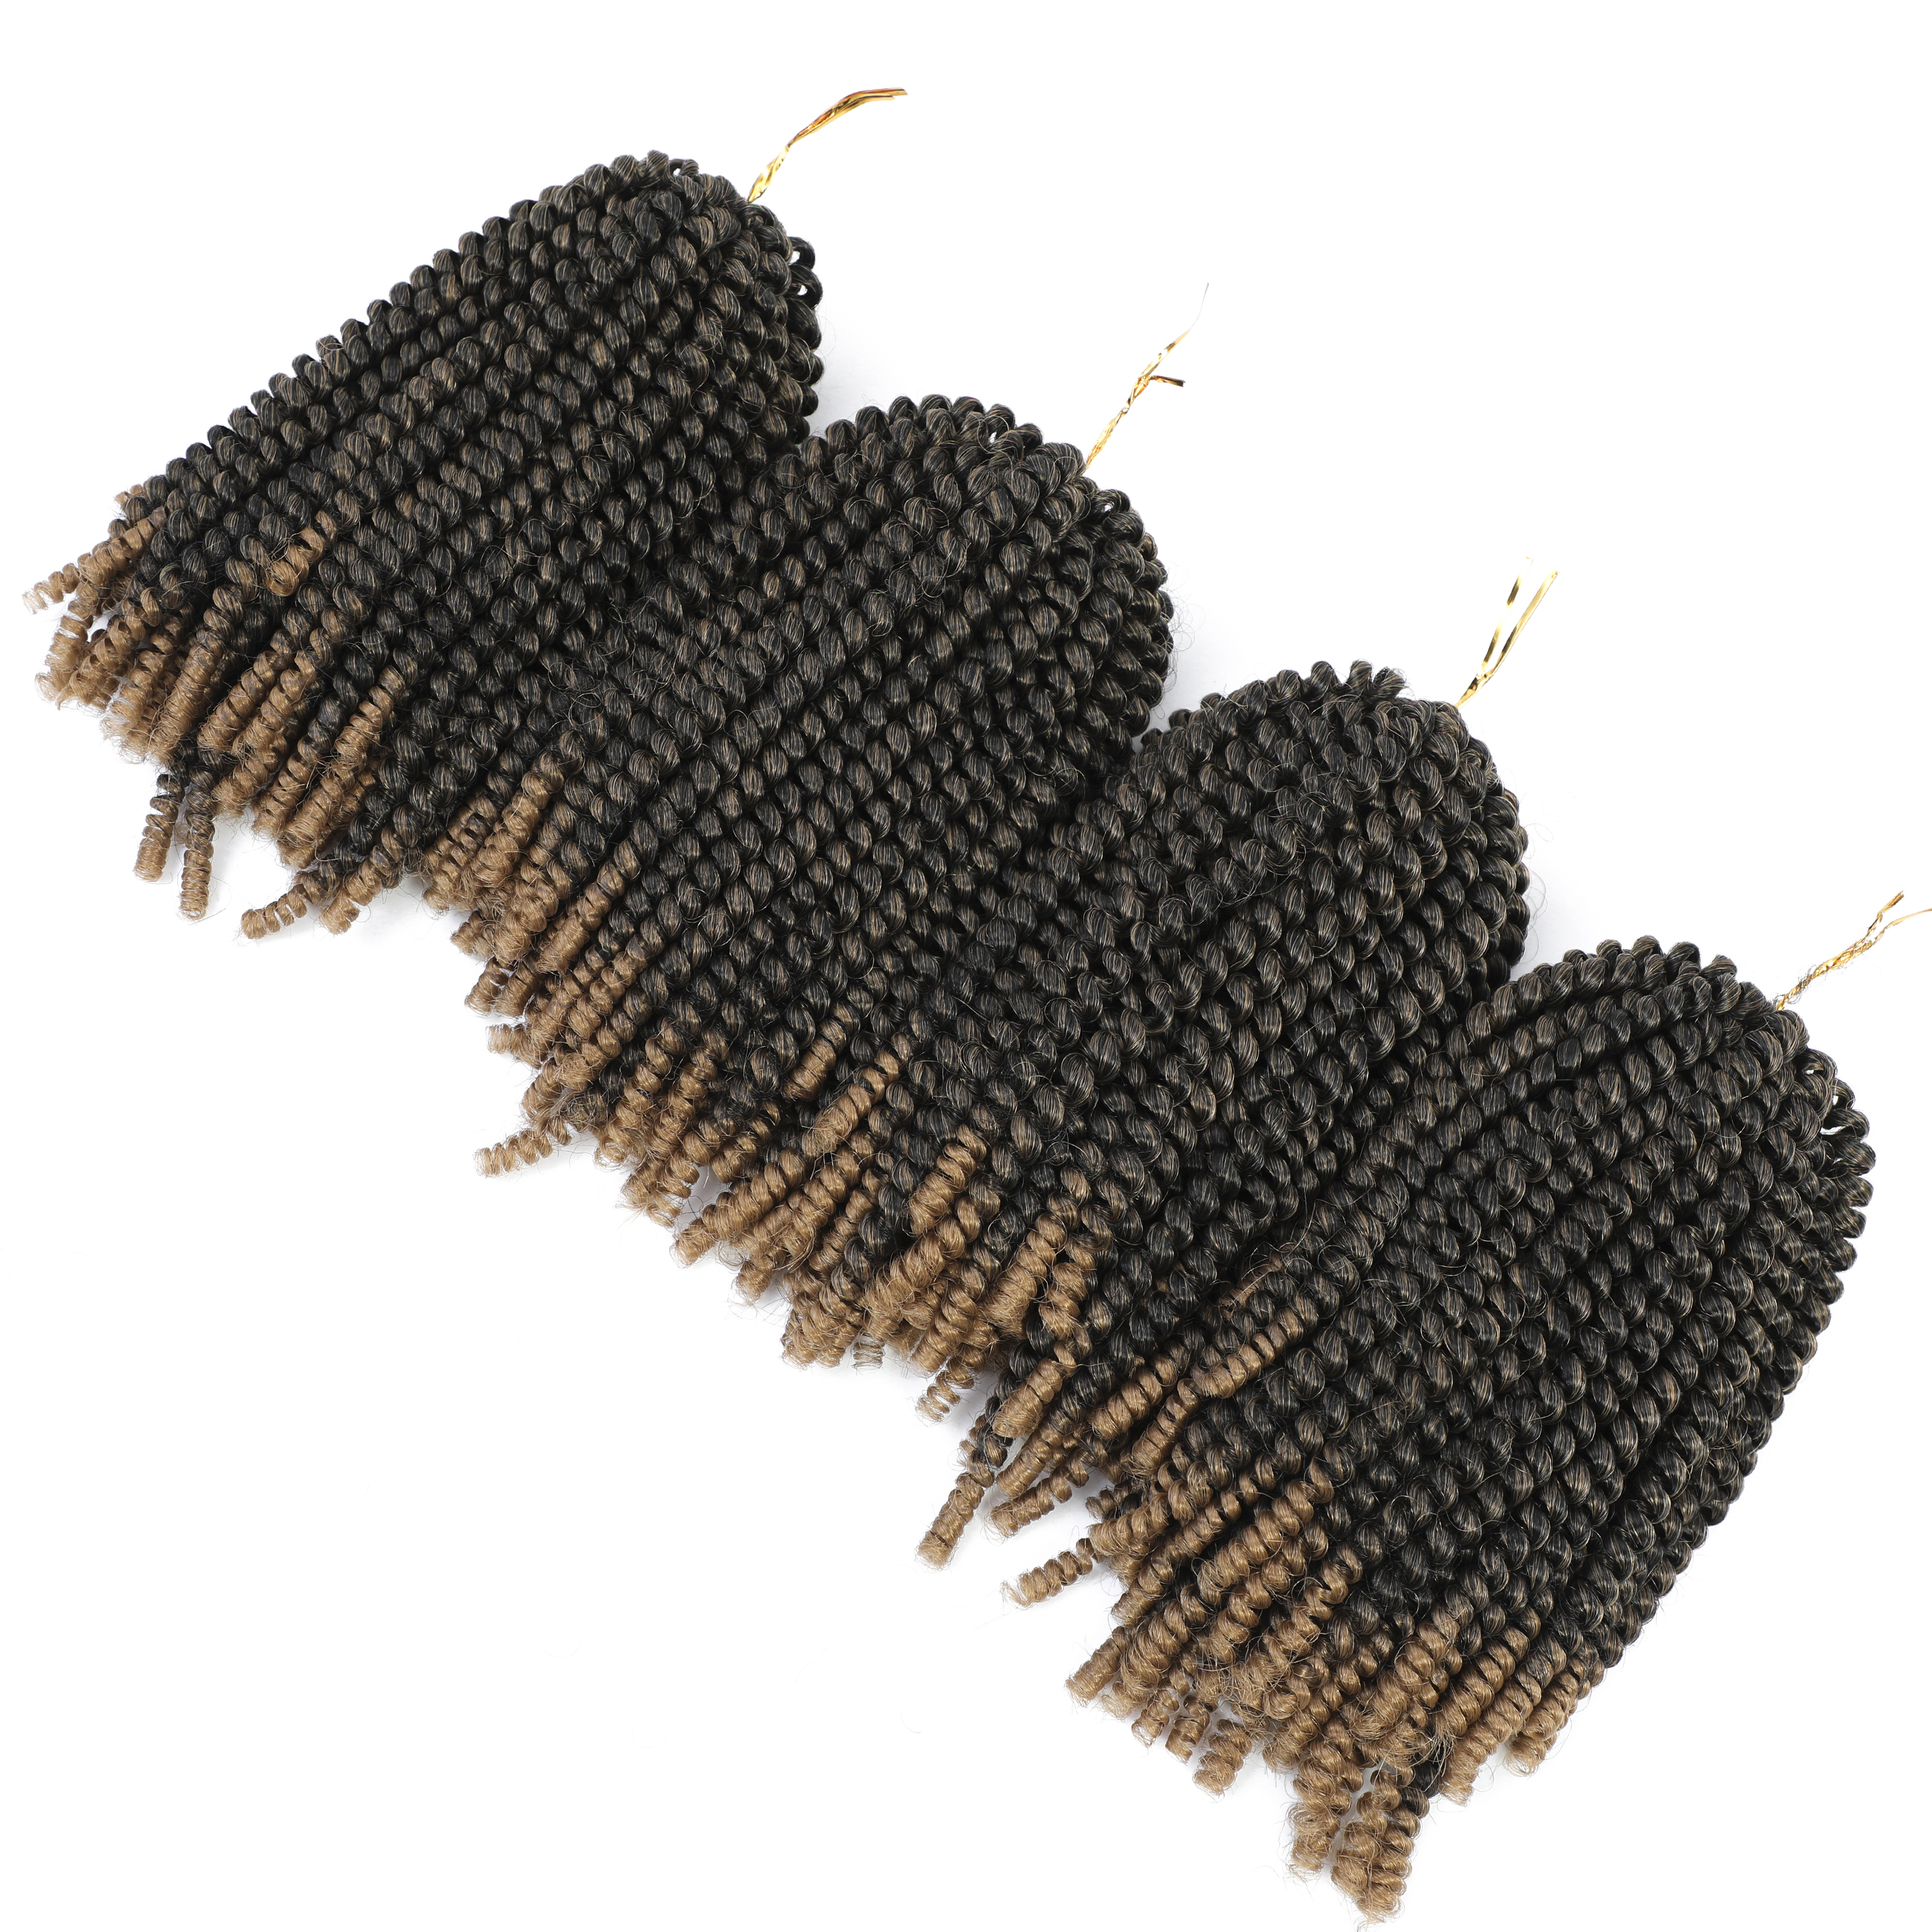 Spring Twist Crochet Braids Hair 6 Packs 8inch - #T27